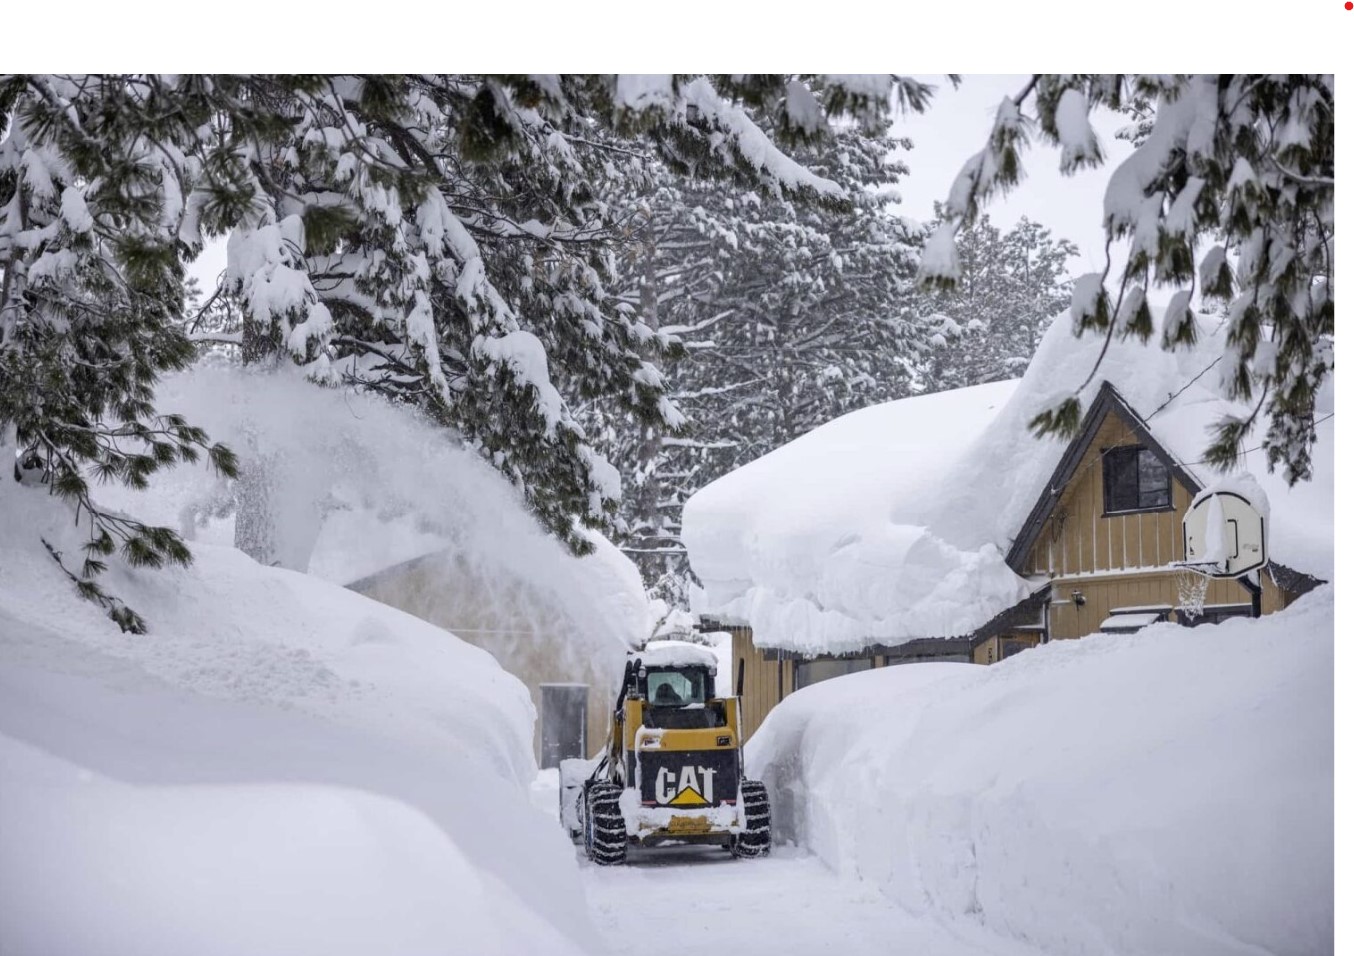 Snowmageddon! Mammoth Mountain ski resort in California closed due to